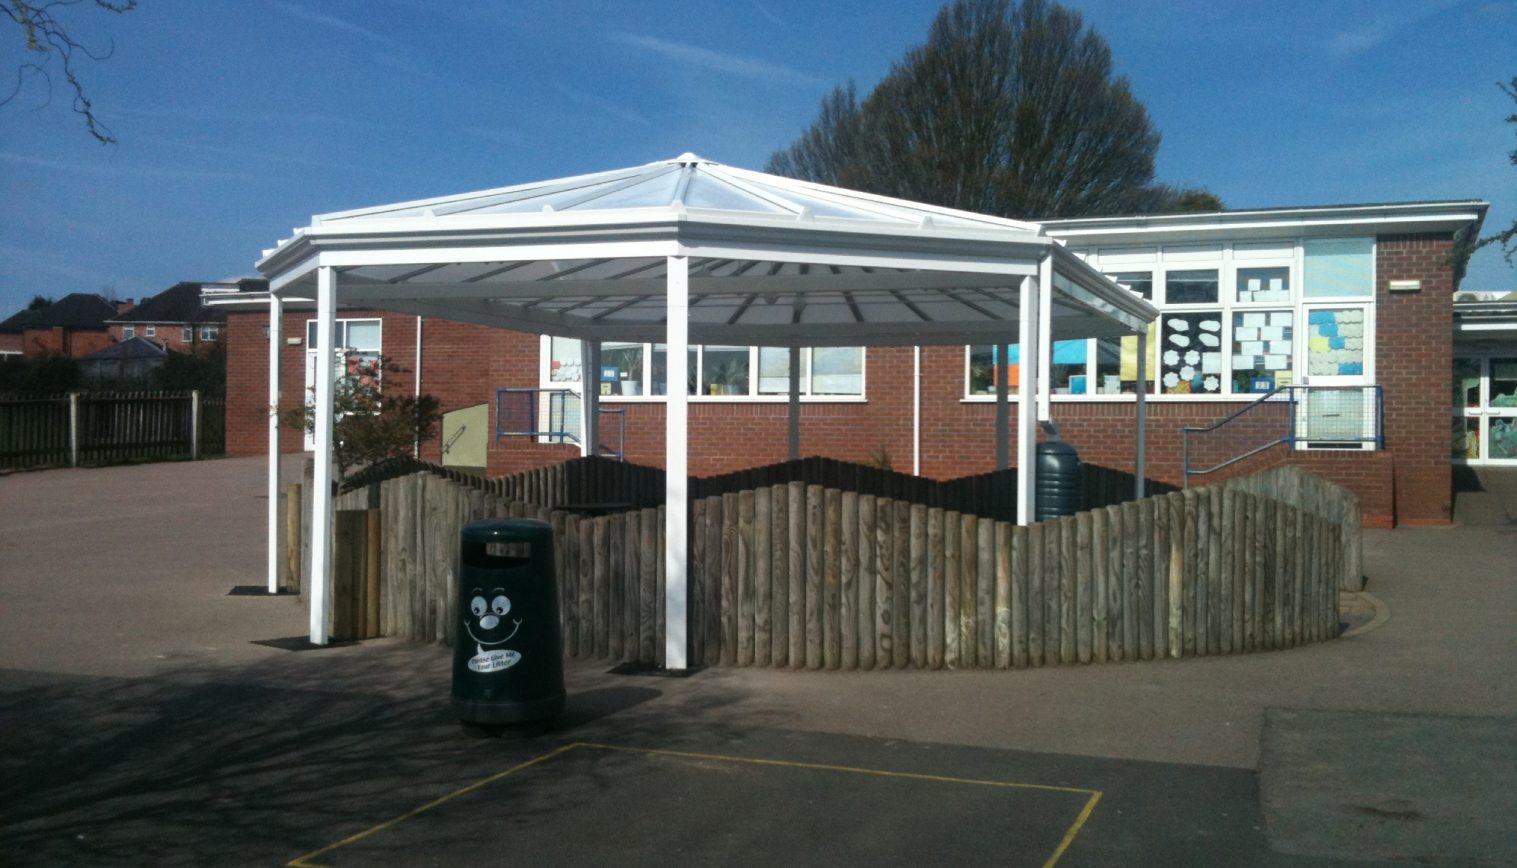 Walmley Infant School – Free Standing Canopy